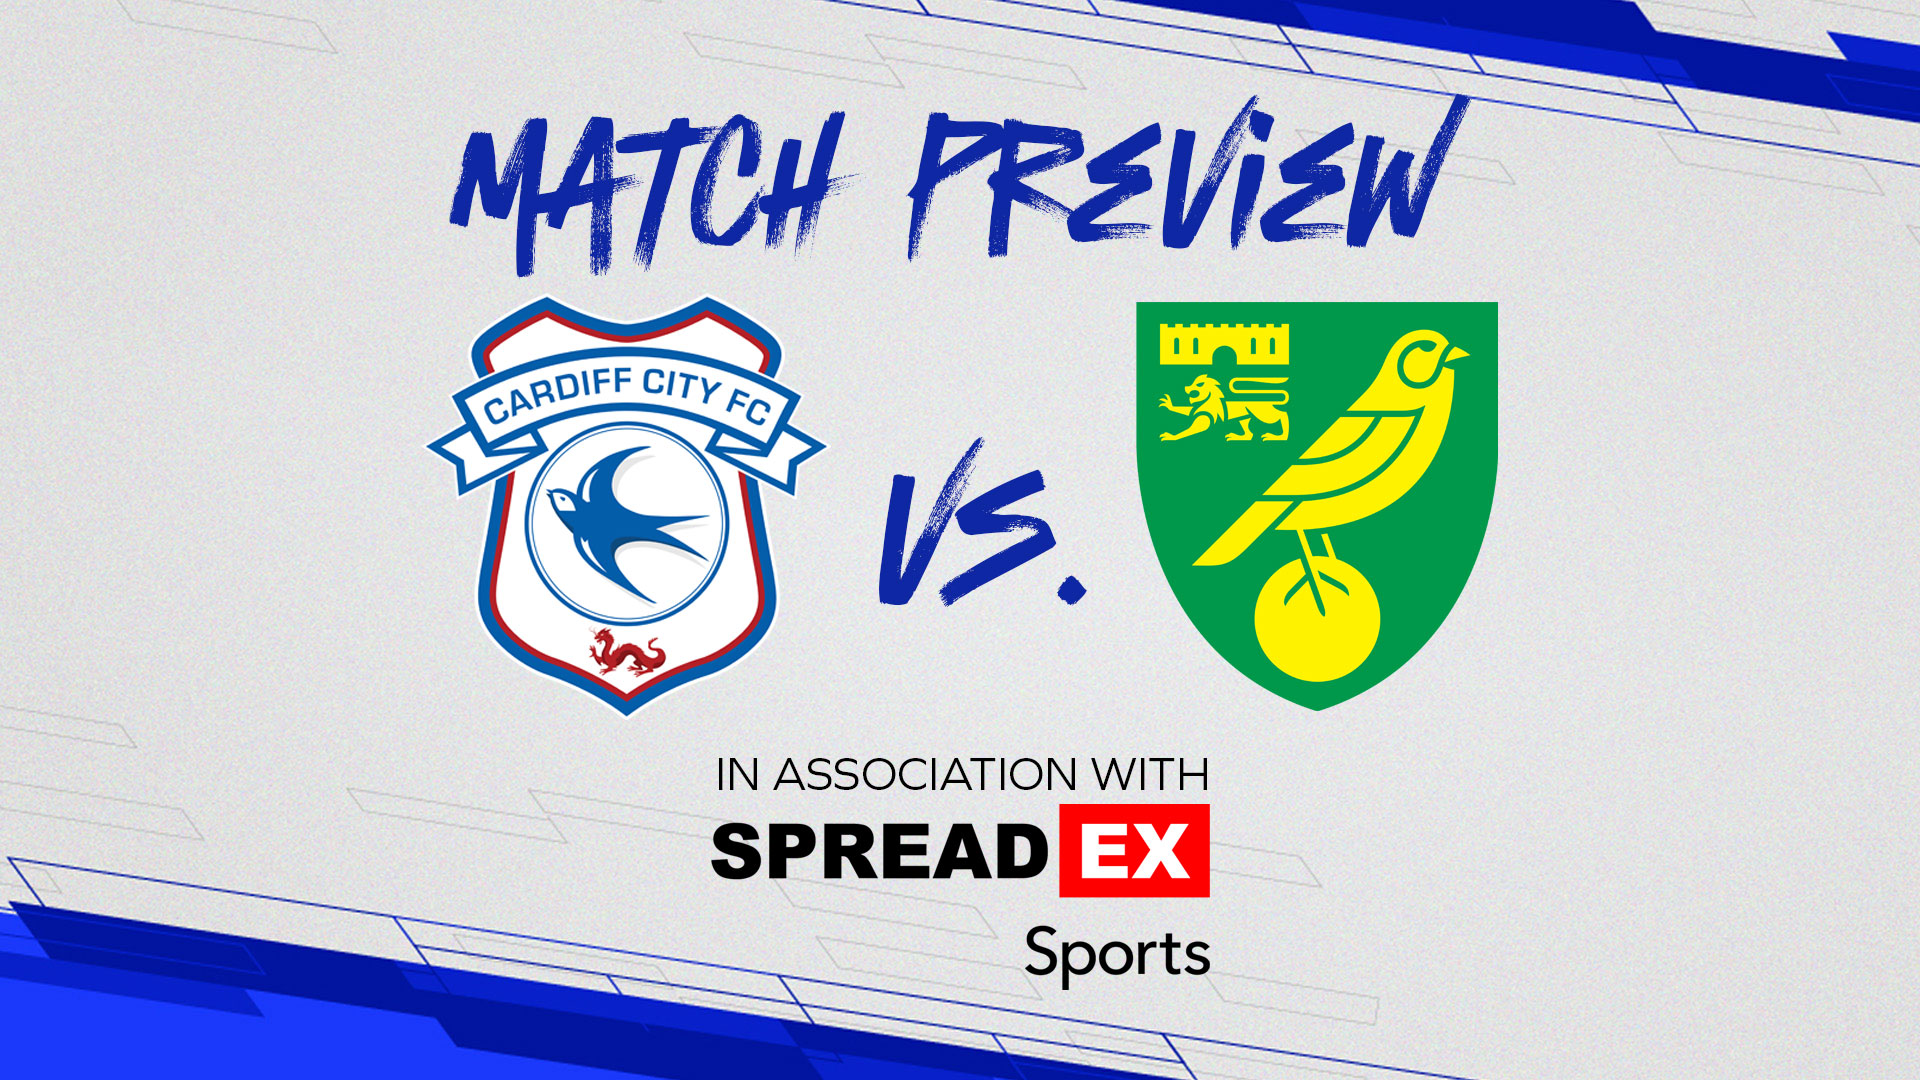 Match Preview: Cardiff City vs. Norwich City